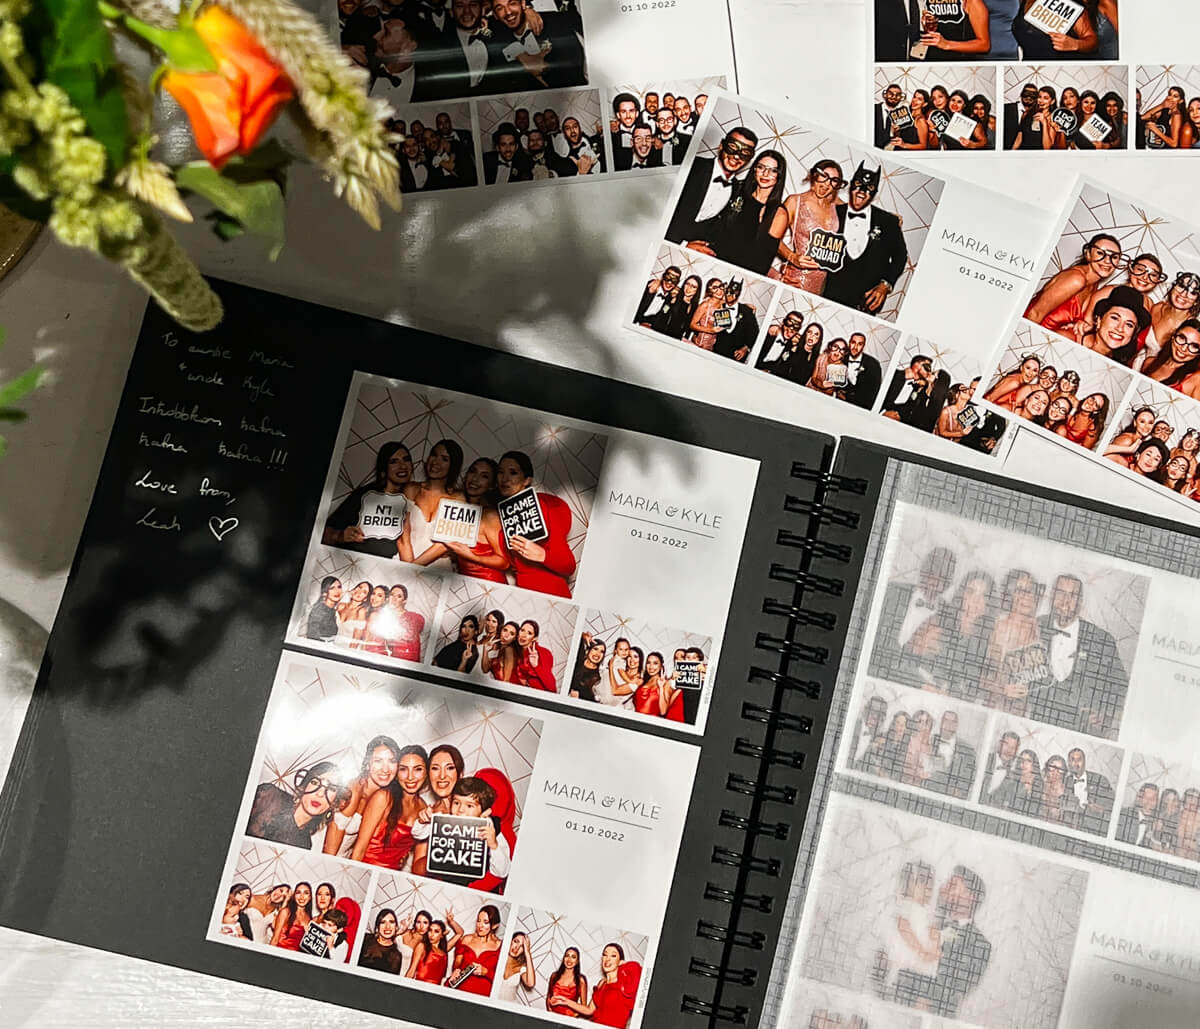 A wedding photo booth guest album